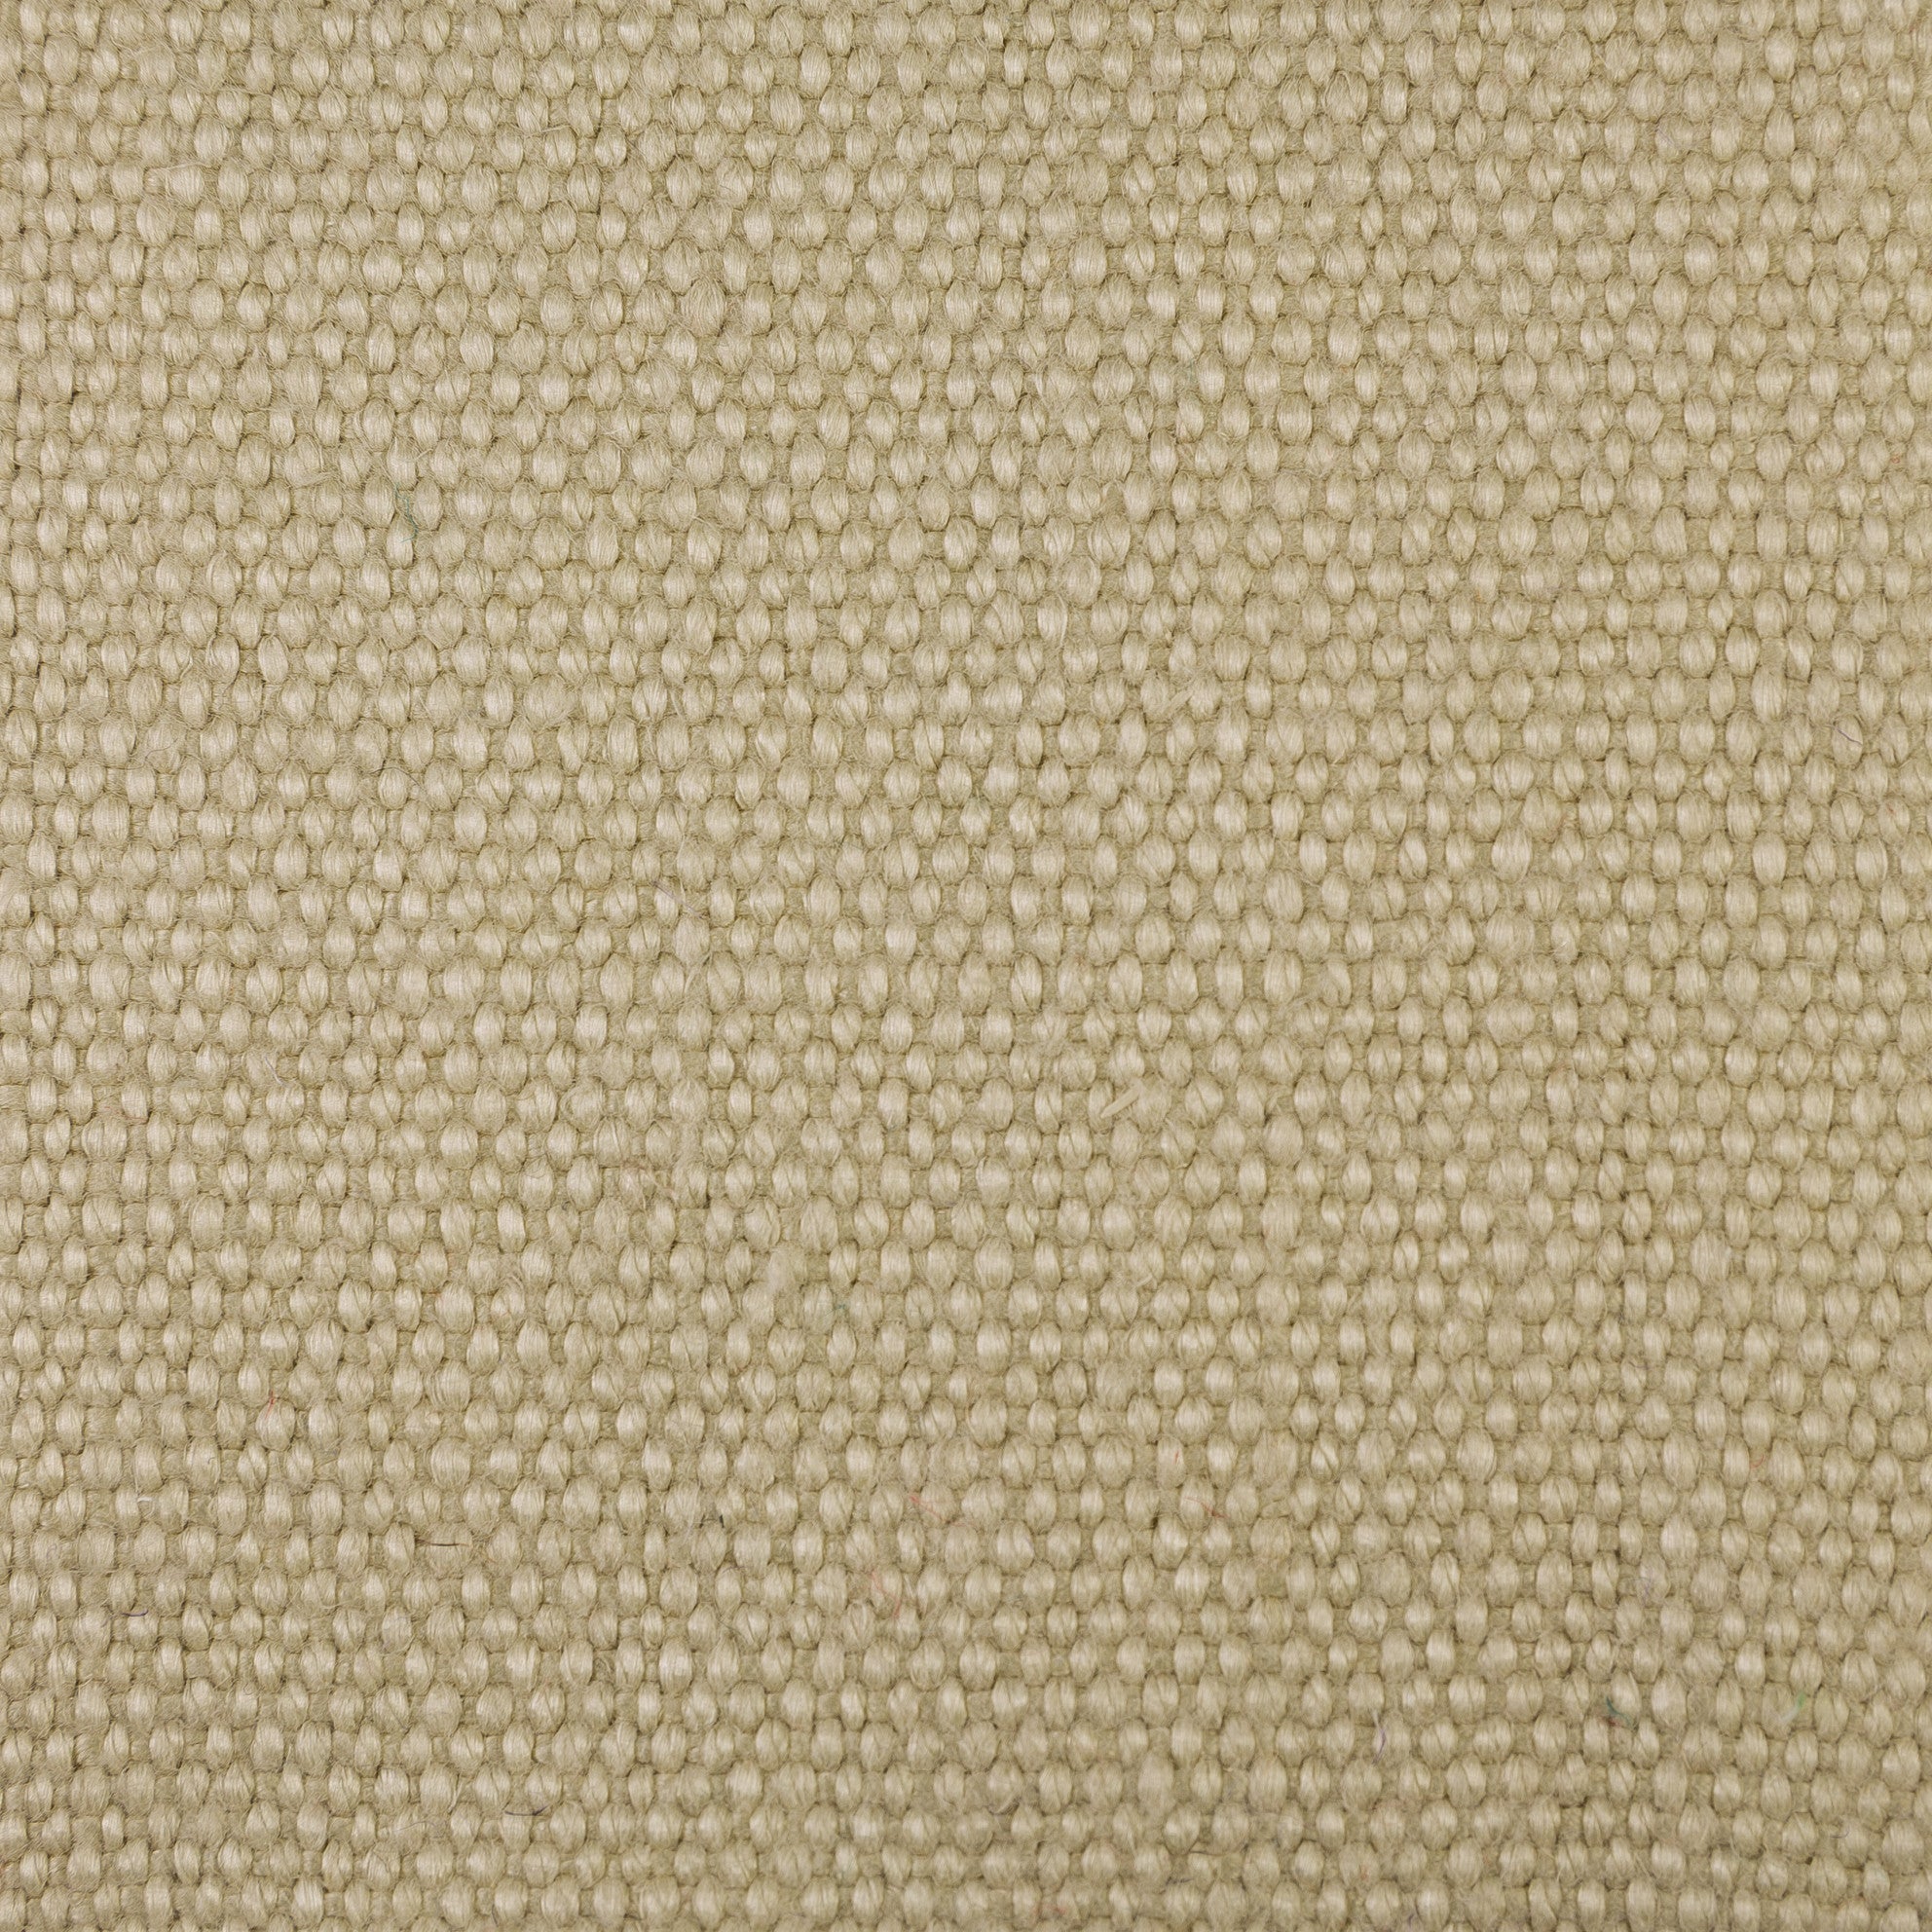 Woven Plain Fabric - Whitby 08/063 Arctic Fox | Nicholas Engert Interiors